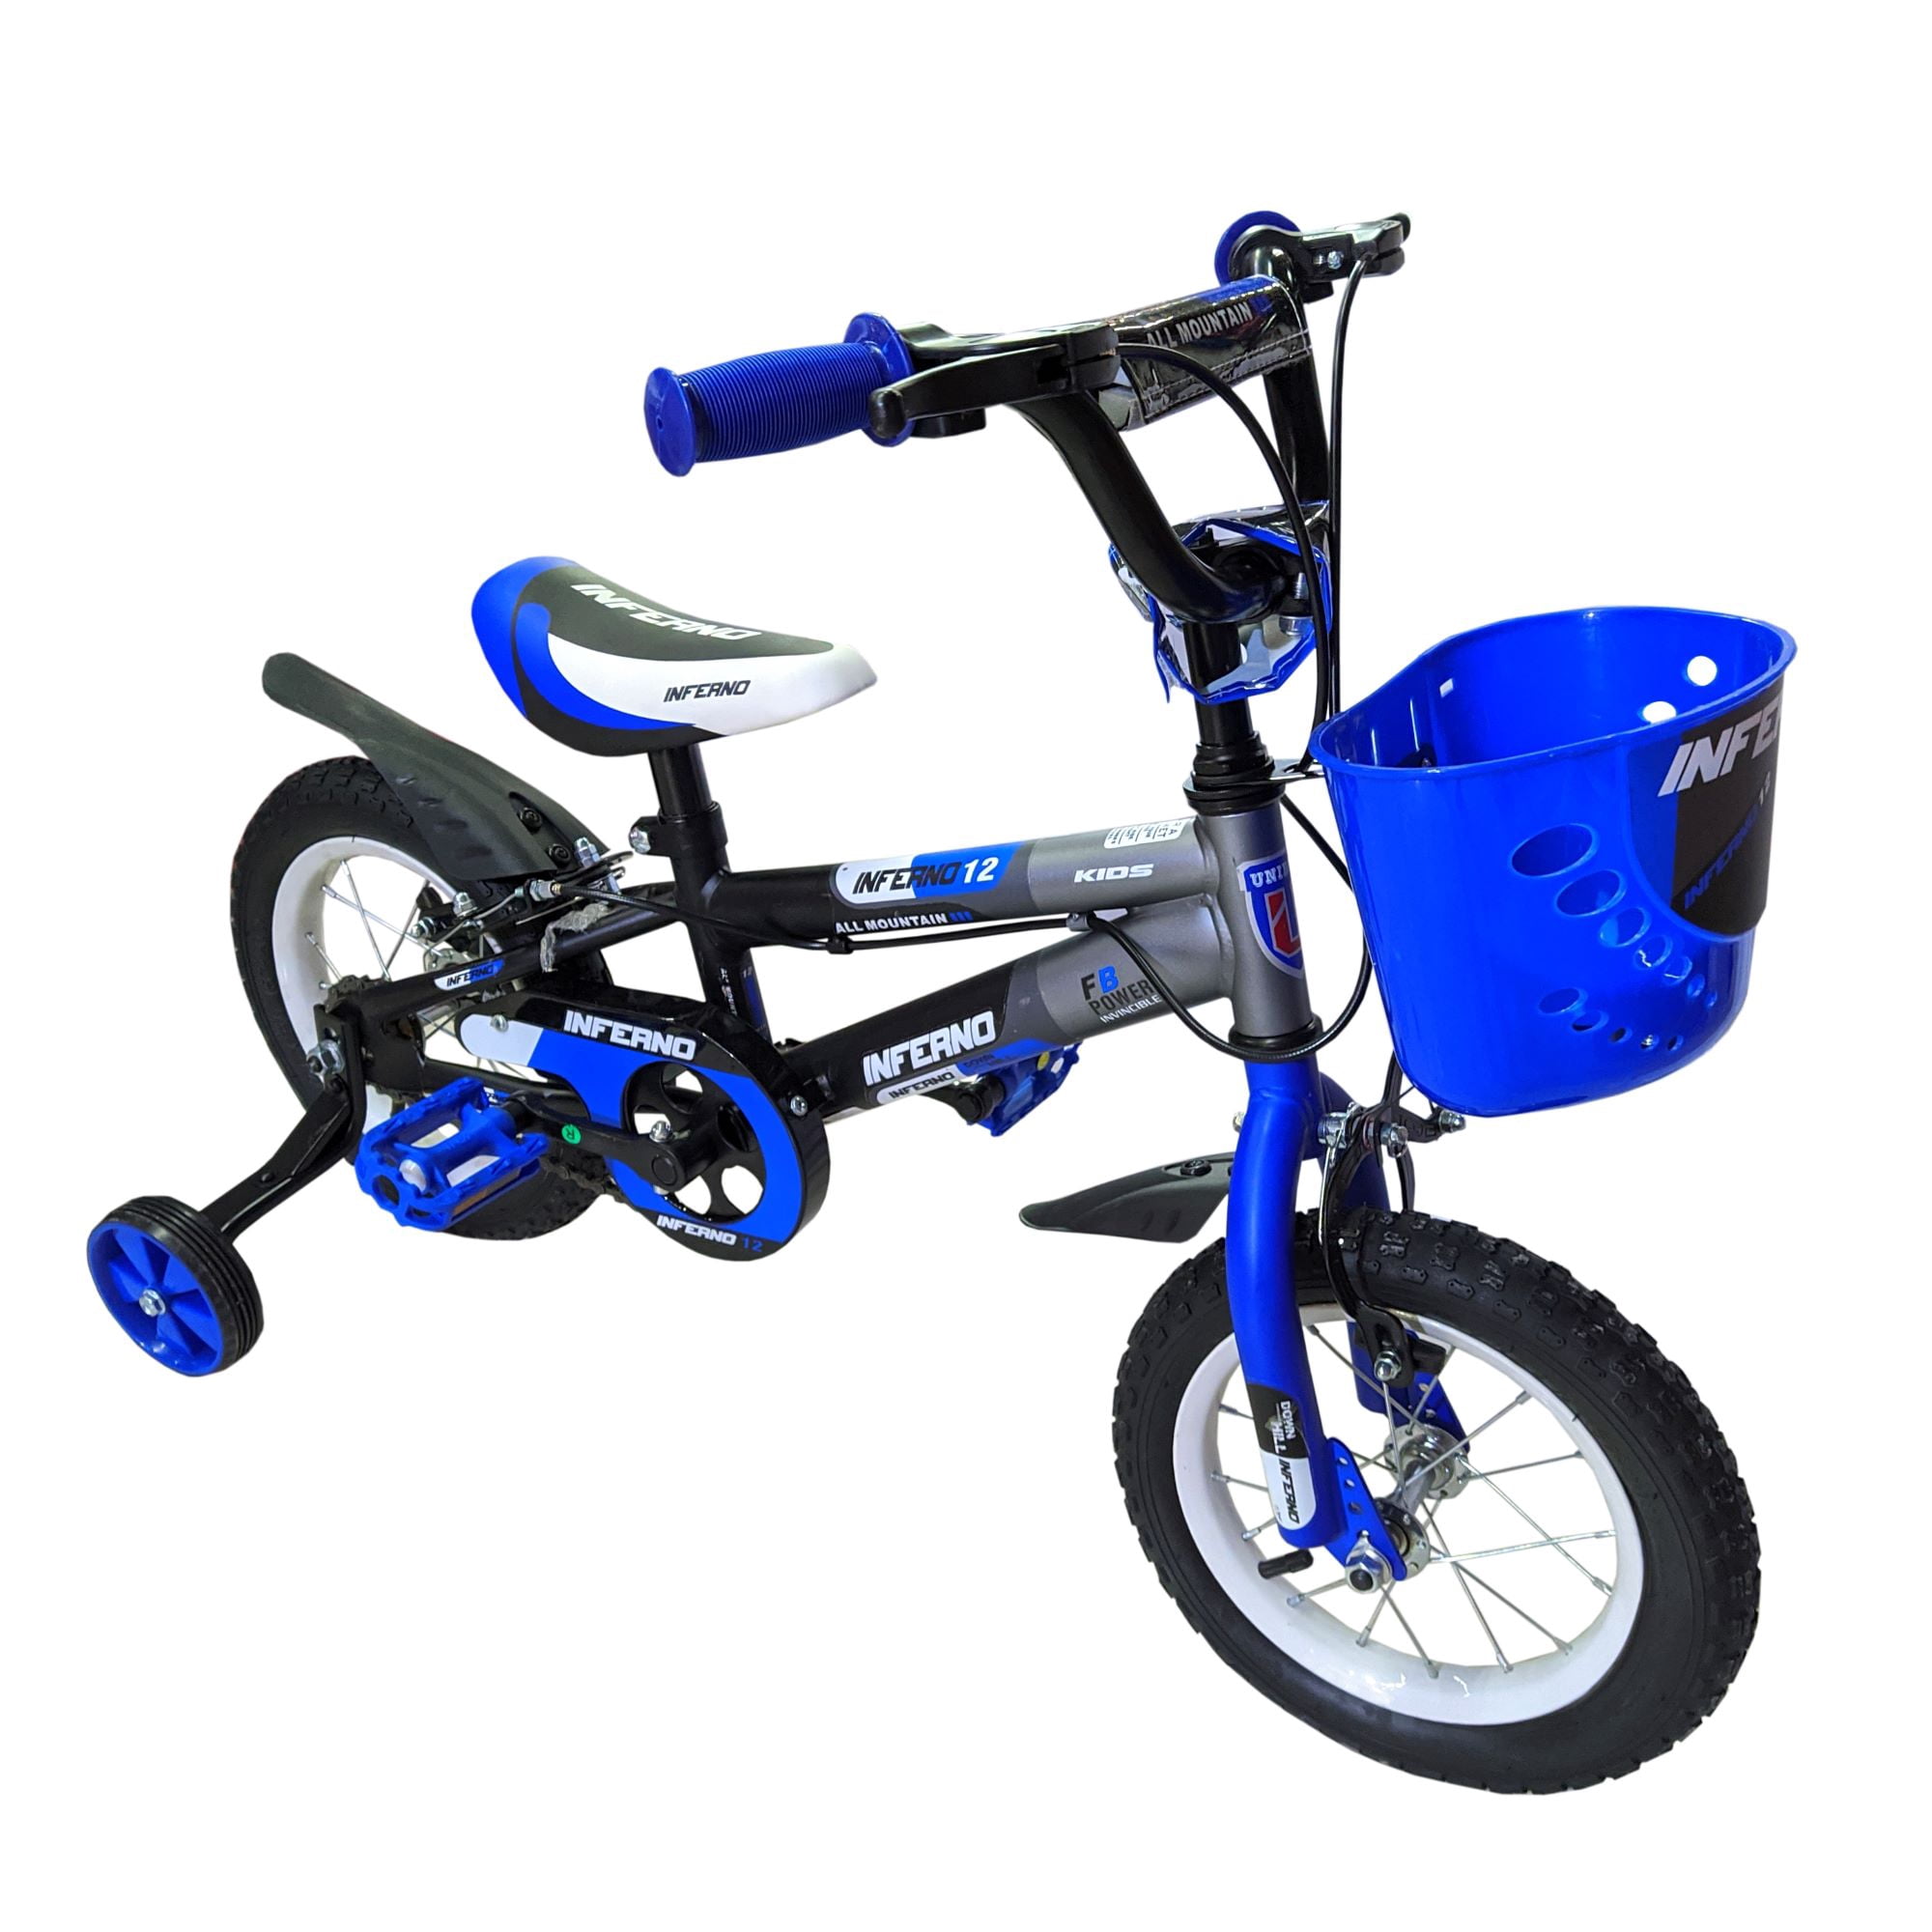 Ytwo Funda Bicicleta Butterfly, Azul